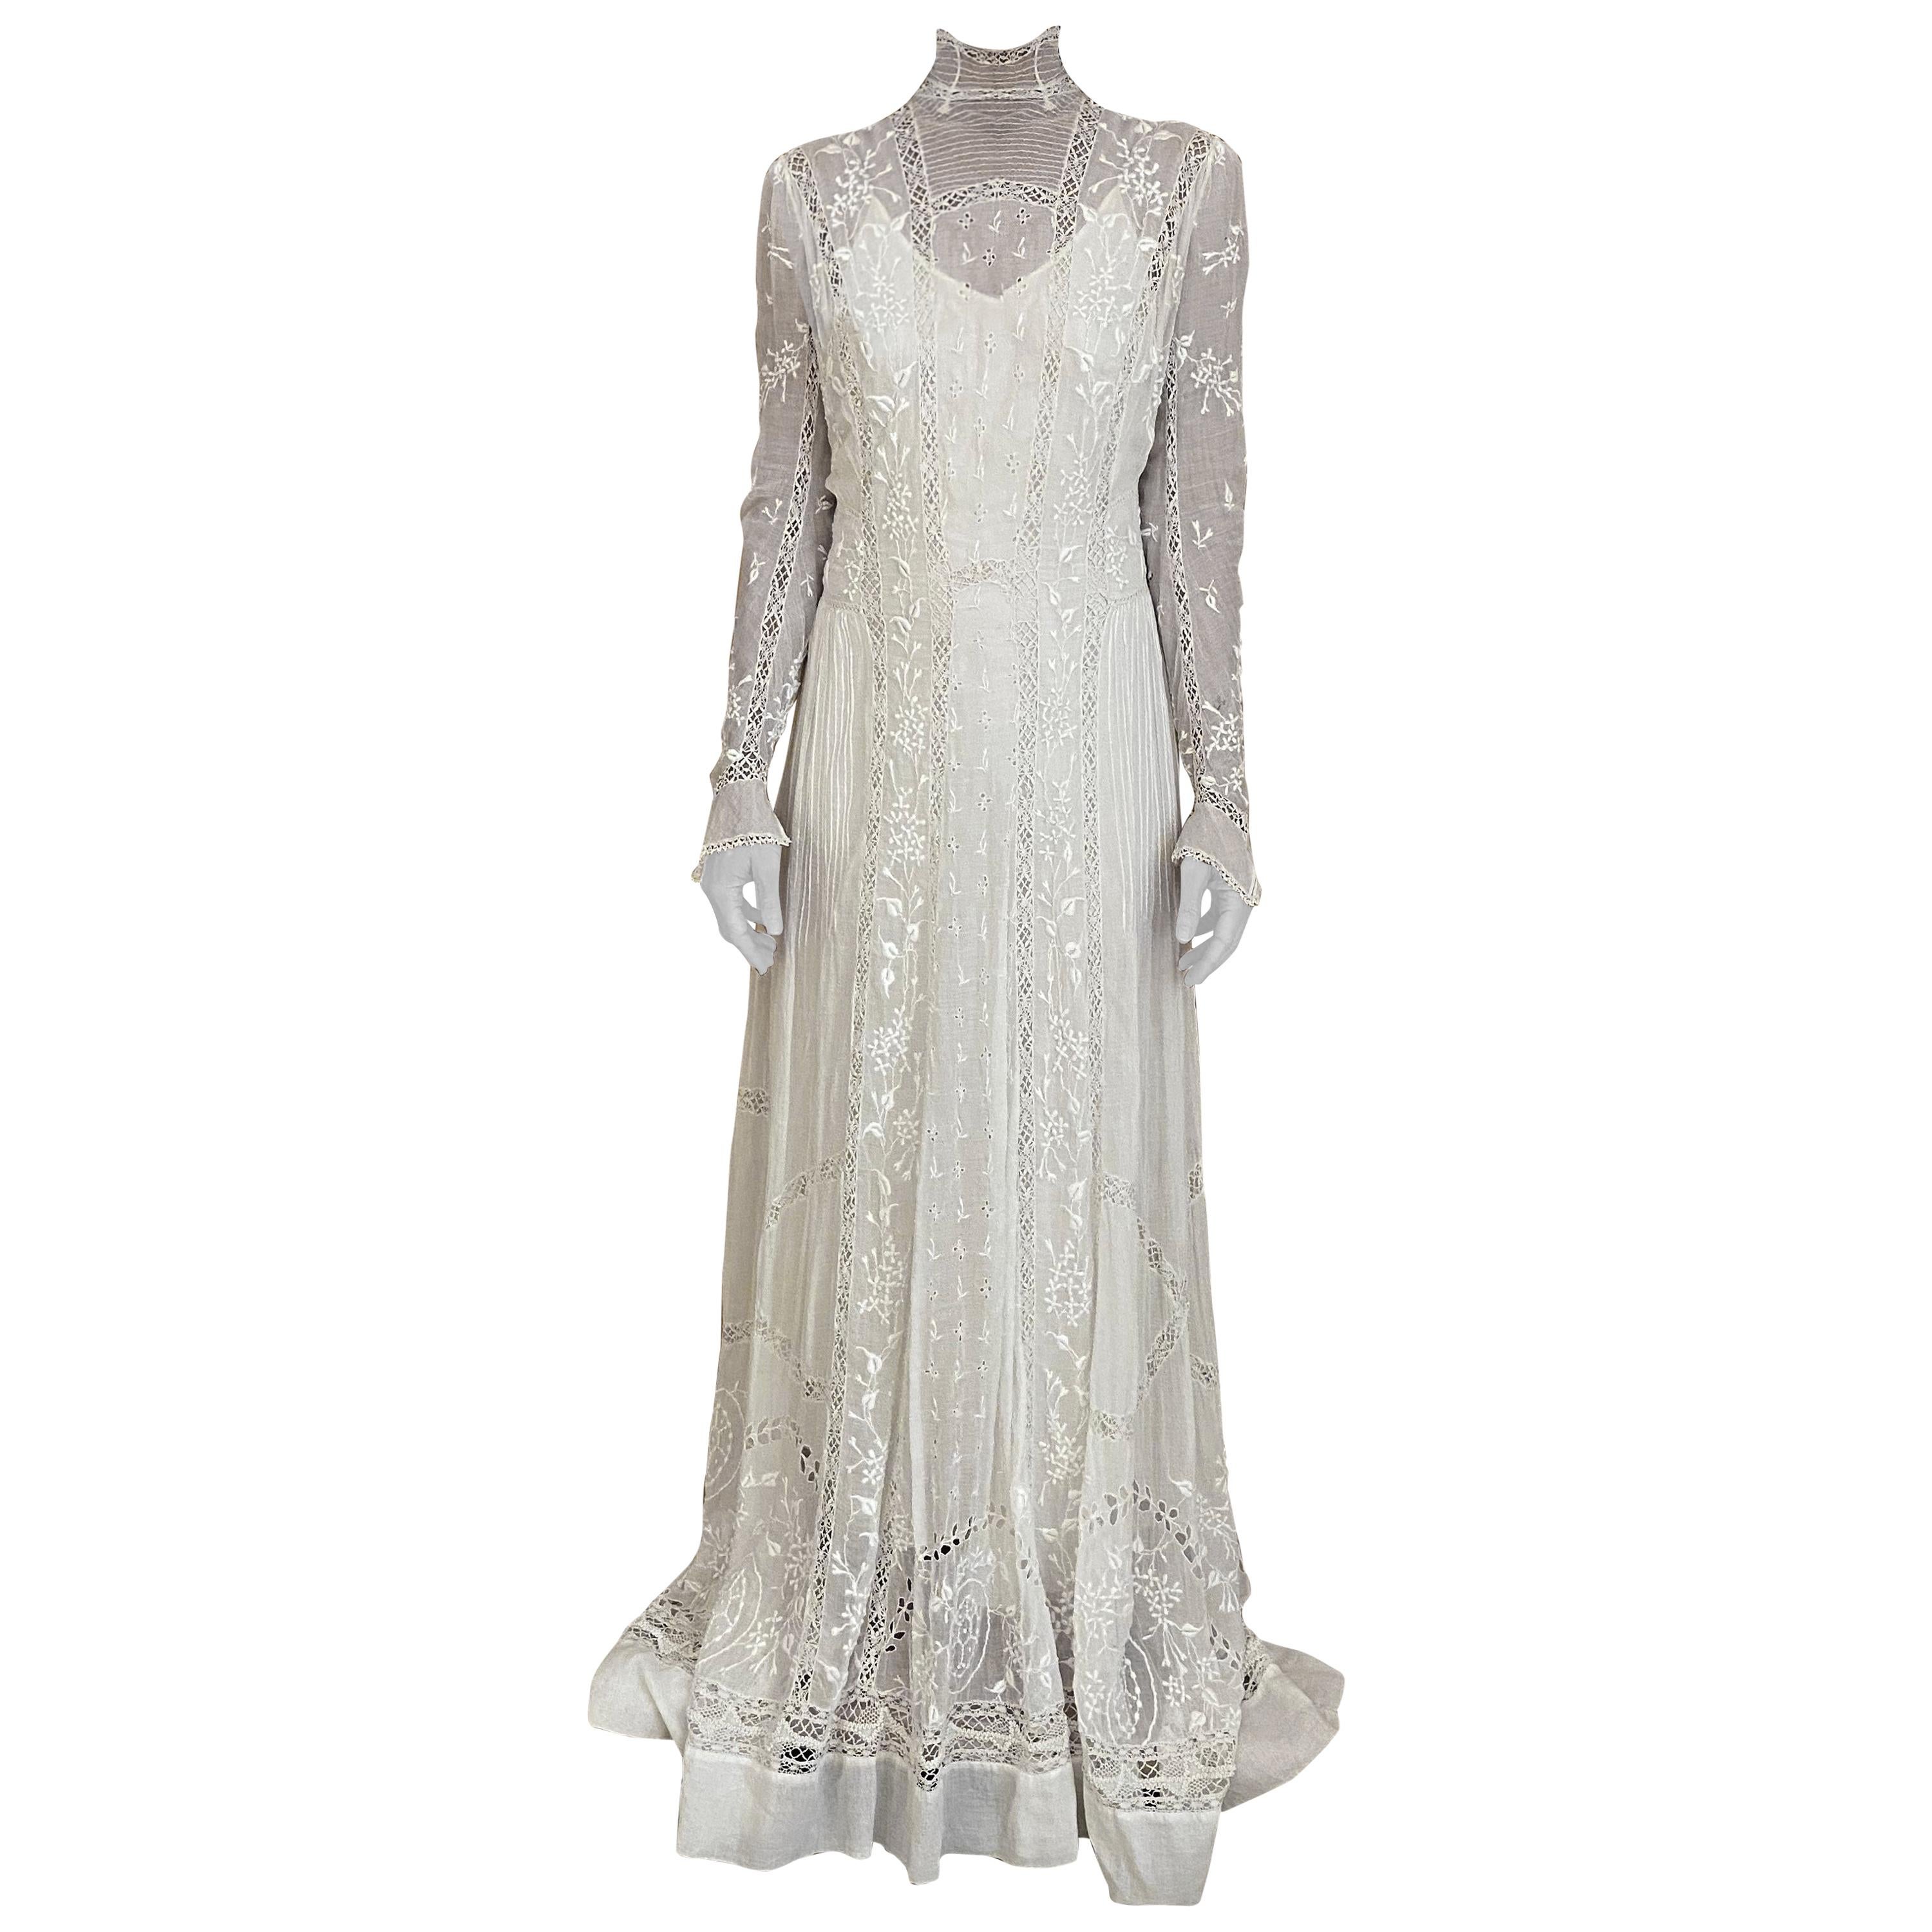 Edwardian White Cotton Embroidered Wedding Dress